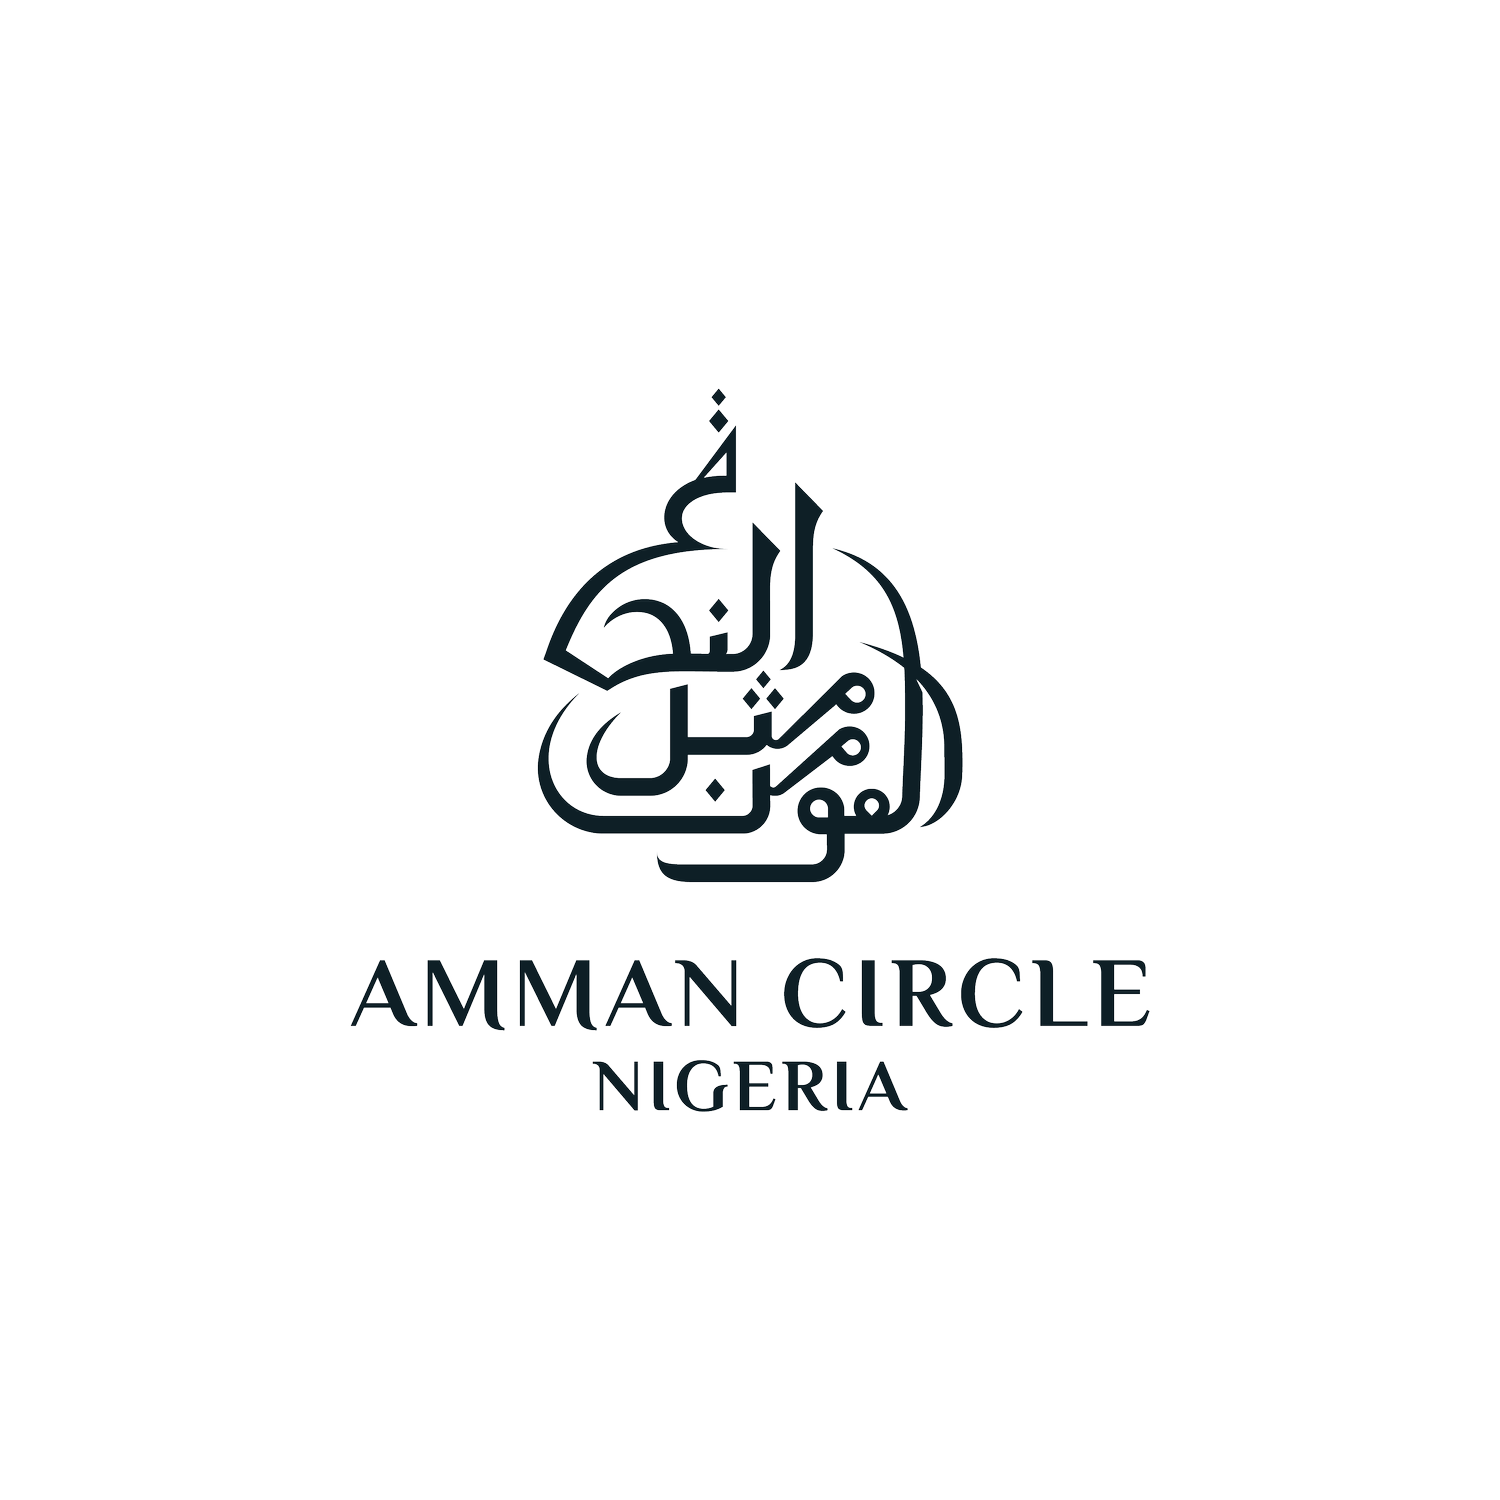 AMMAN CIRCLE